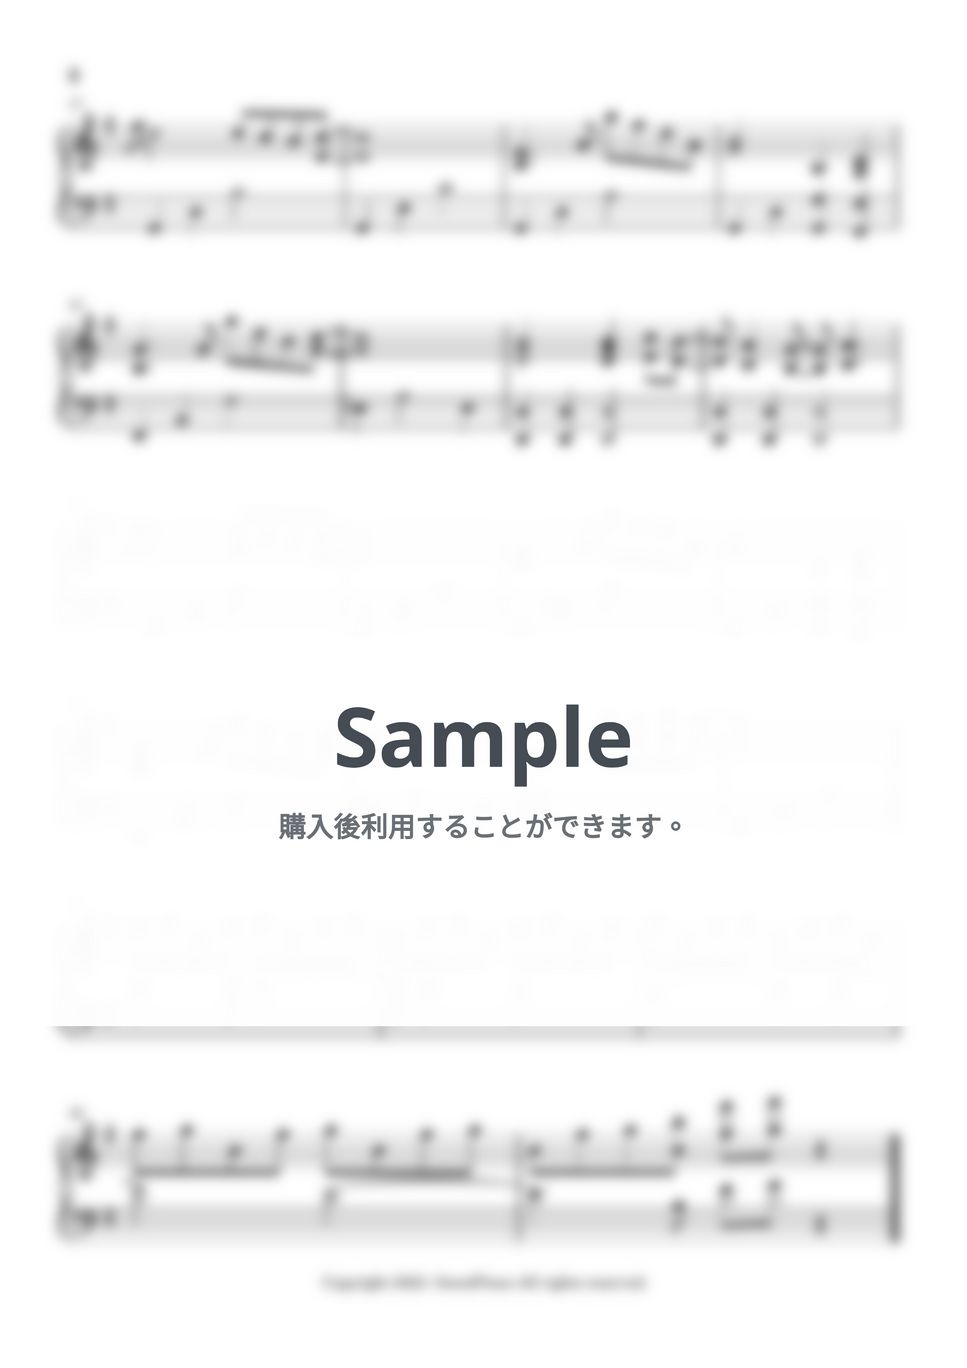 Joe Hisaishi - Ask me why (眞人の決意, Mahito's Commitment, 마히토의 결의) (君たちはどう生きるか OST track 34) by 今日ピアノ(Oneul Piano)